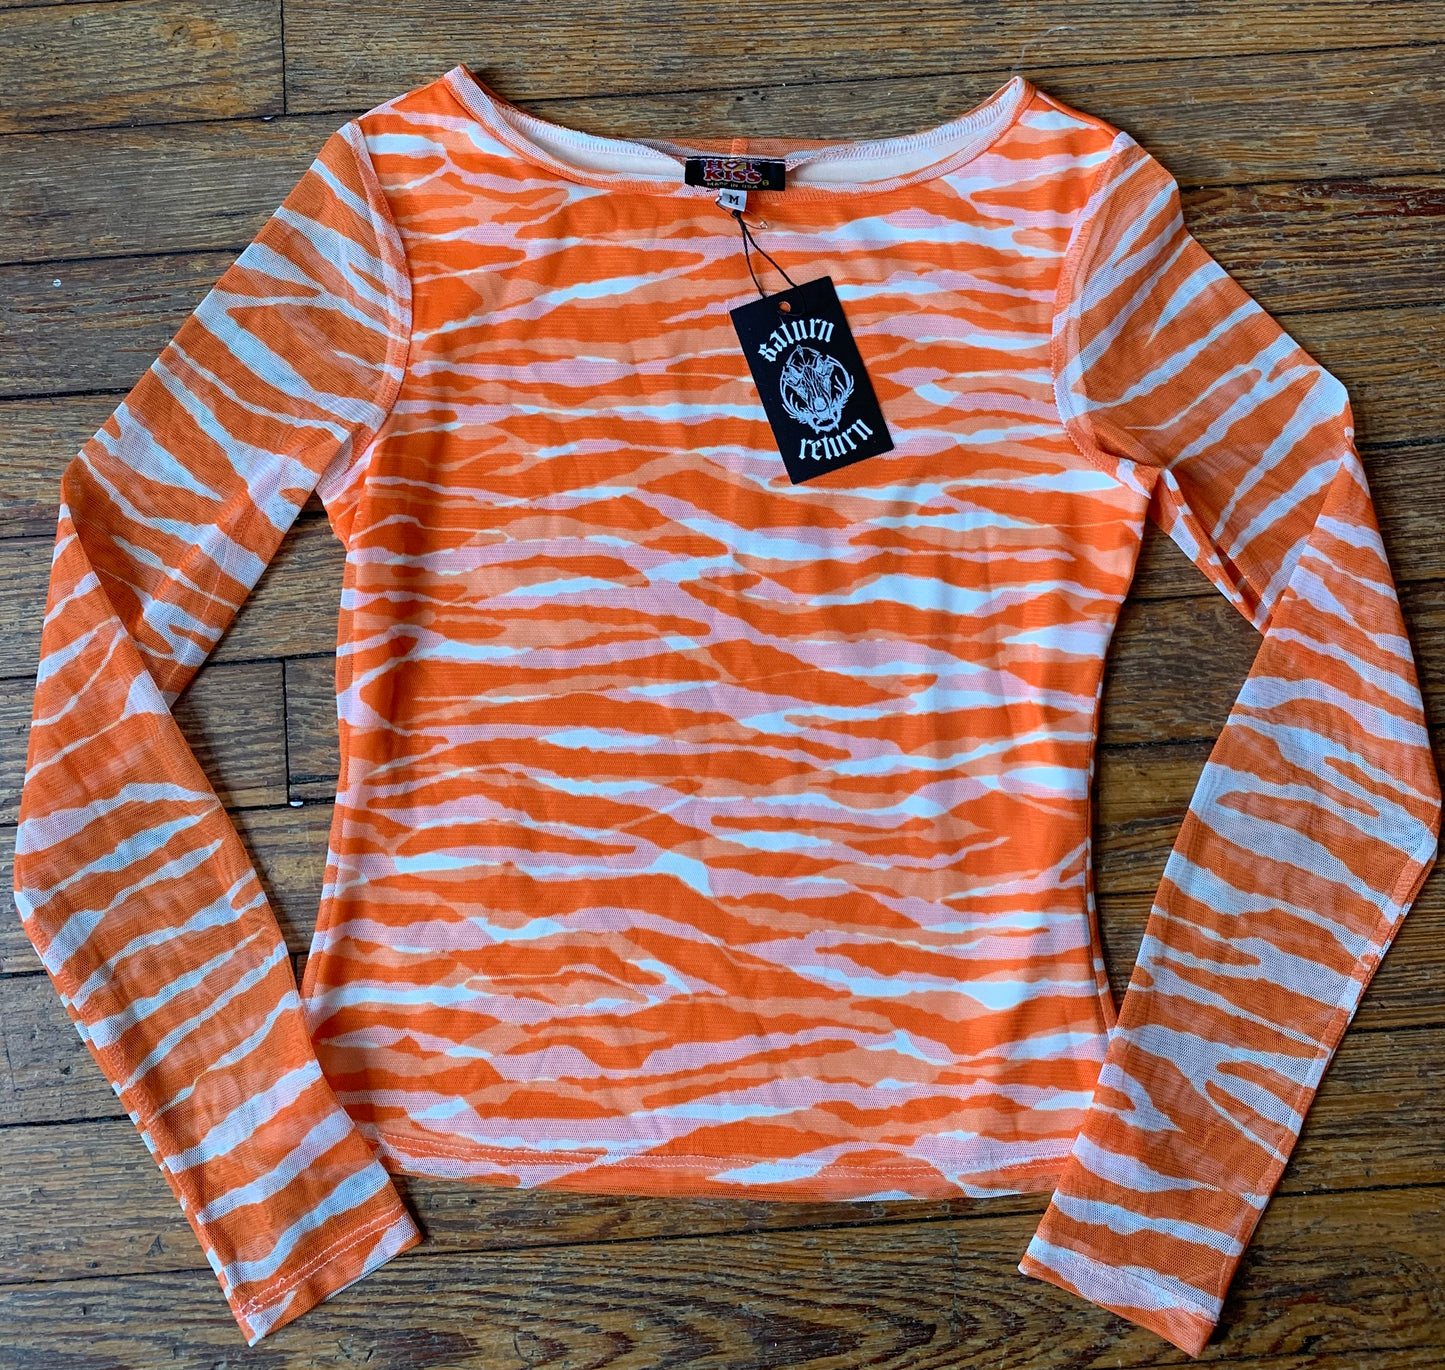 Vintage 90’s Hot Kiss Orange Tiger Strap Camo Mesh Long Sleeve Top